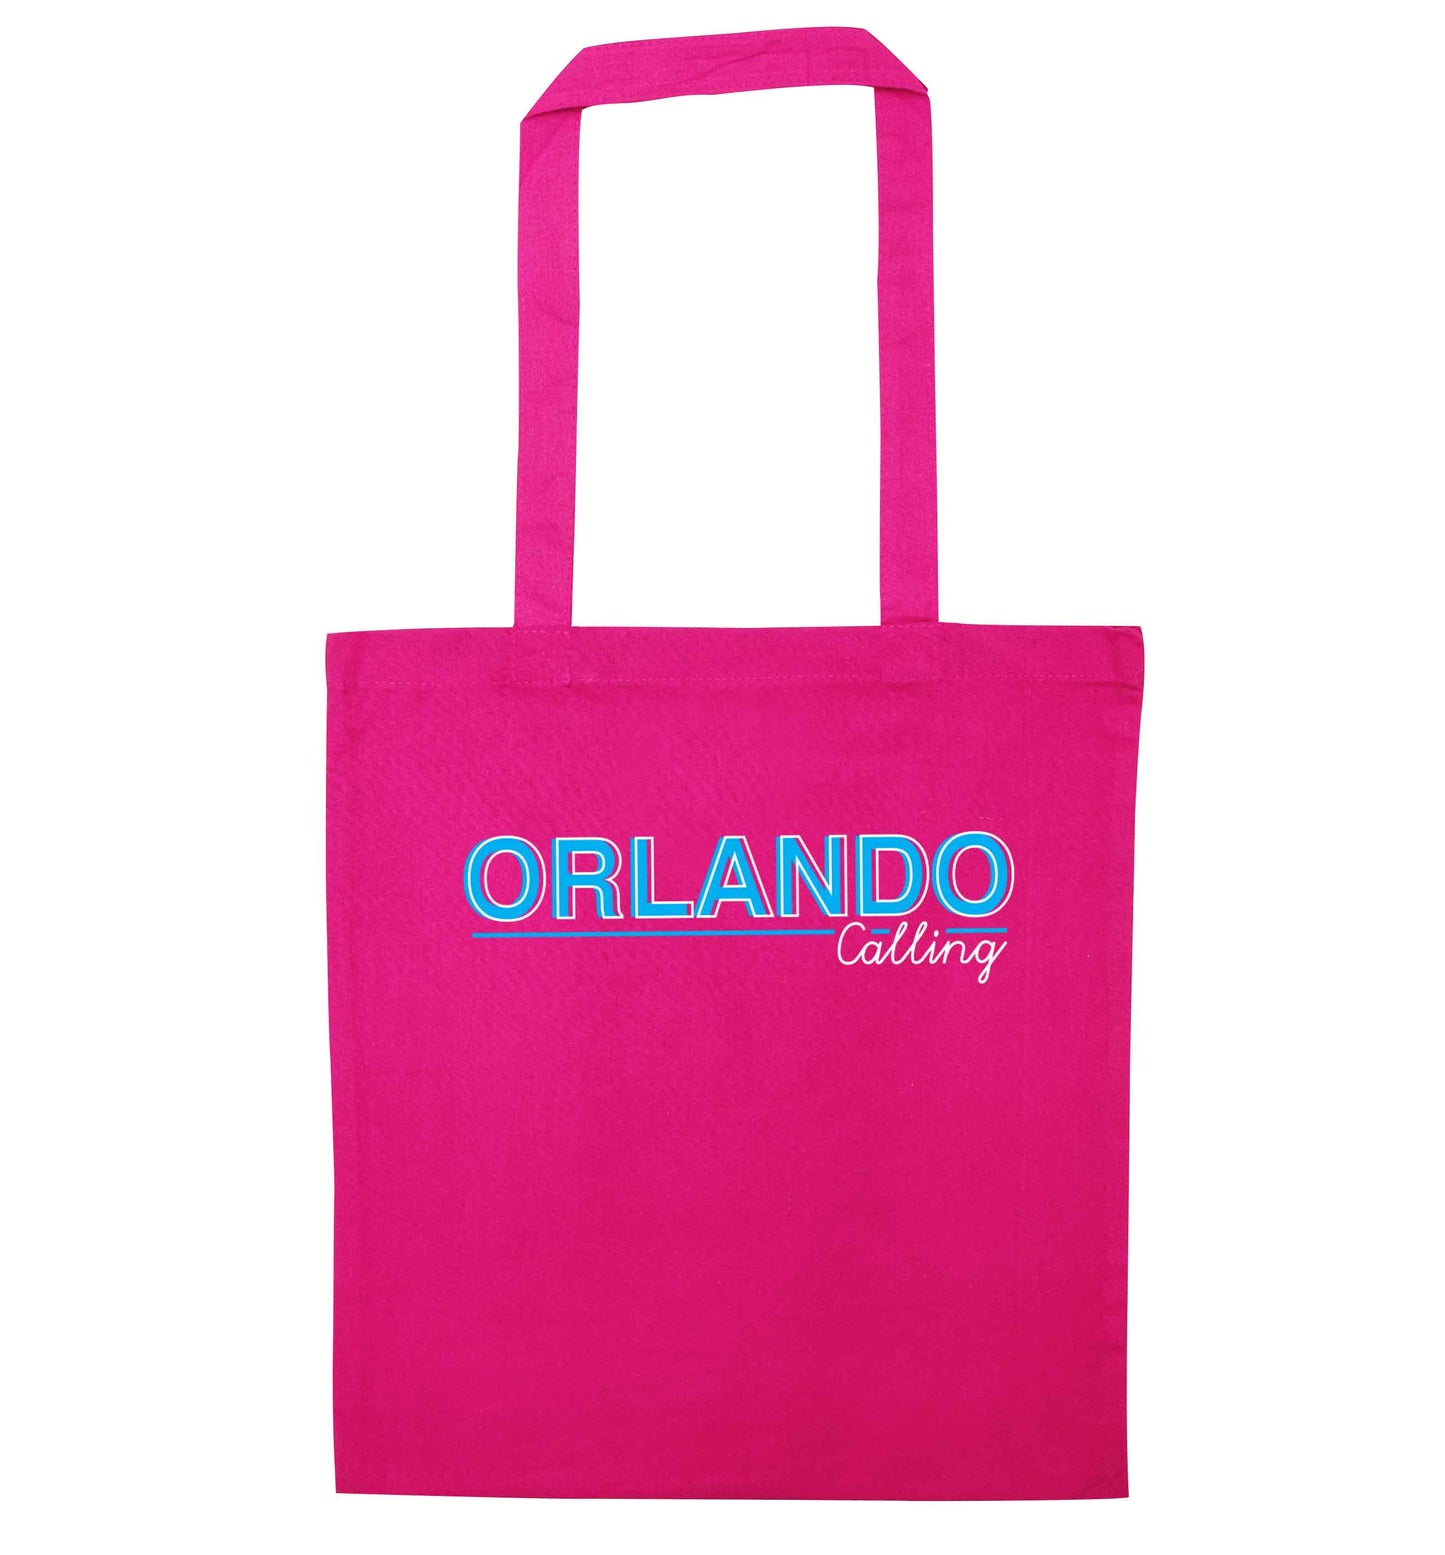 Orlando calling pink tote bag